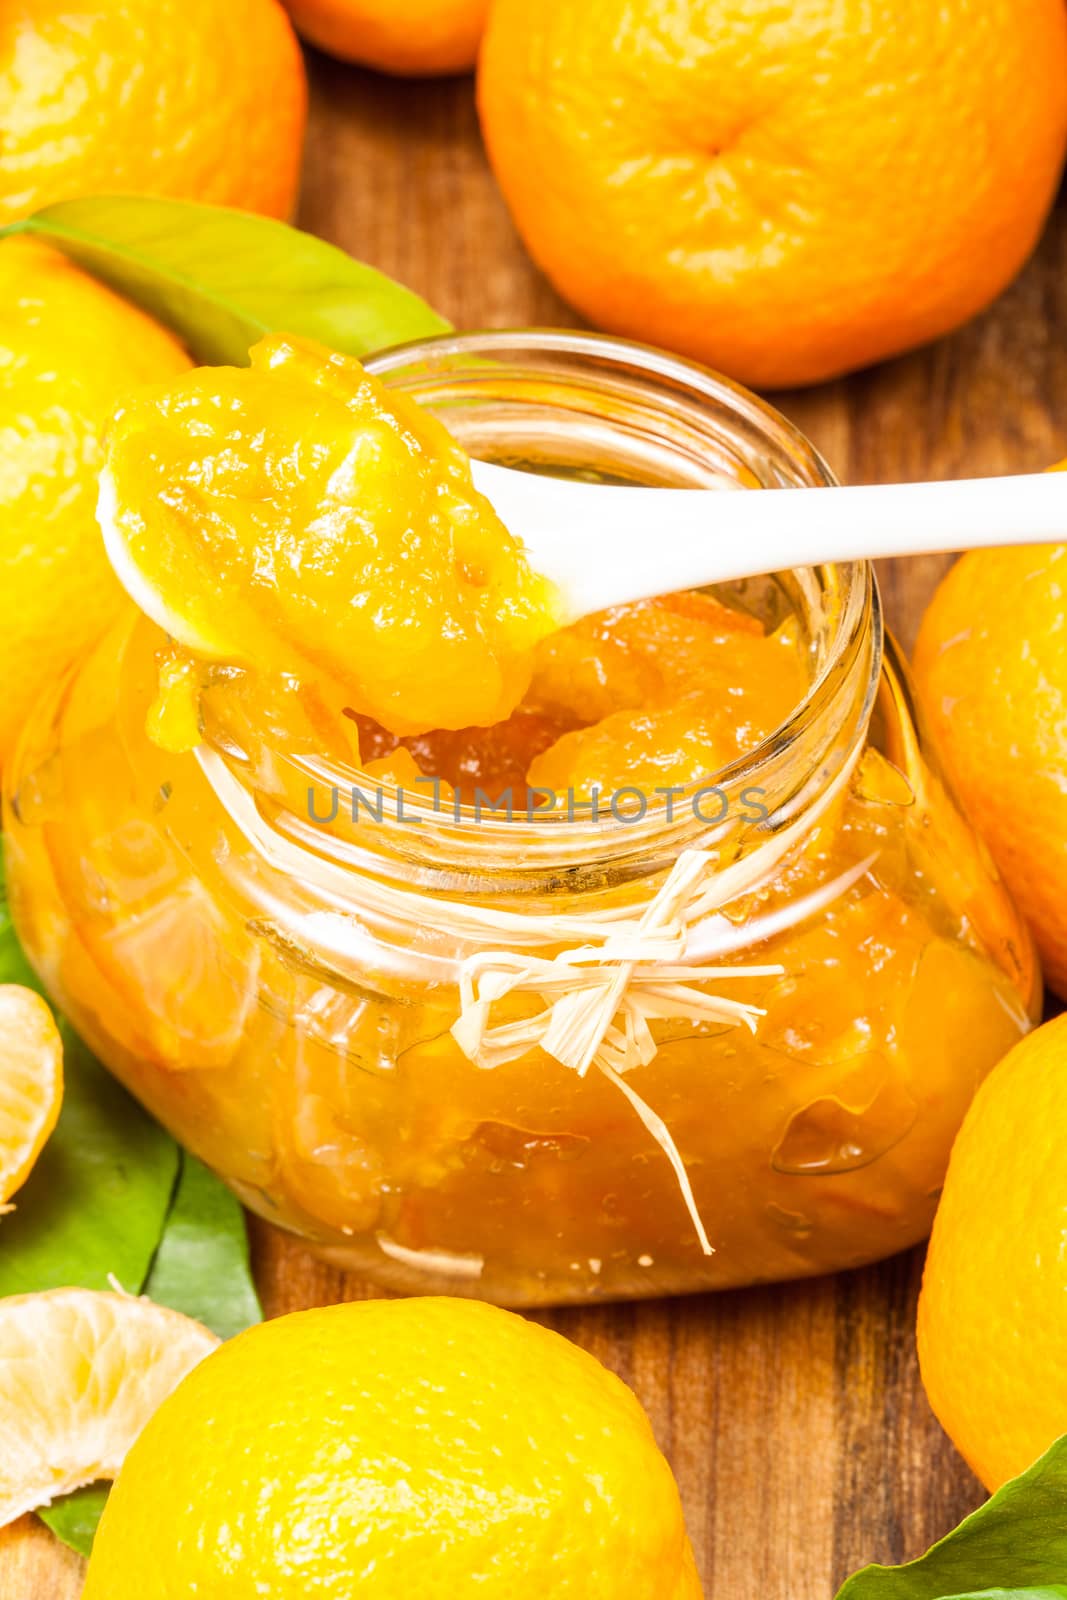 orange mandarin homemade jam in a glass jar